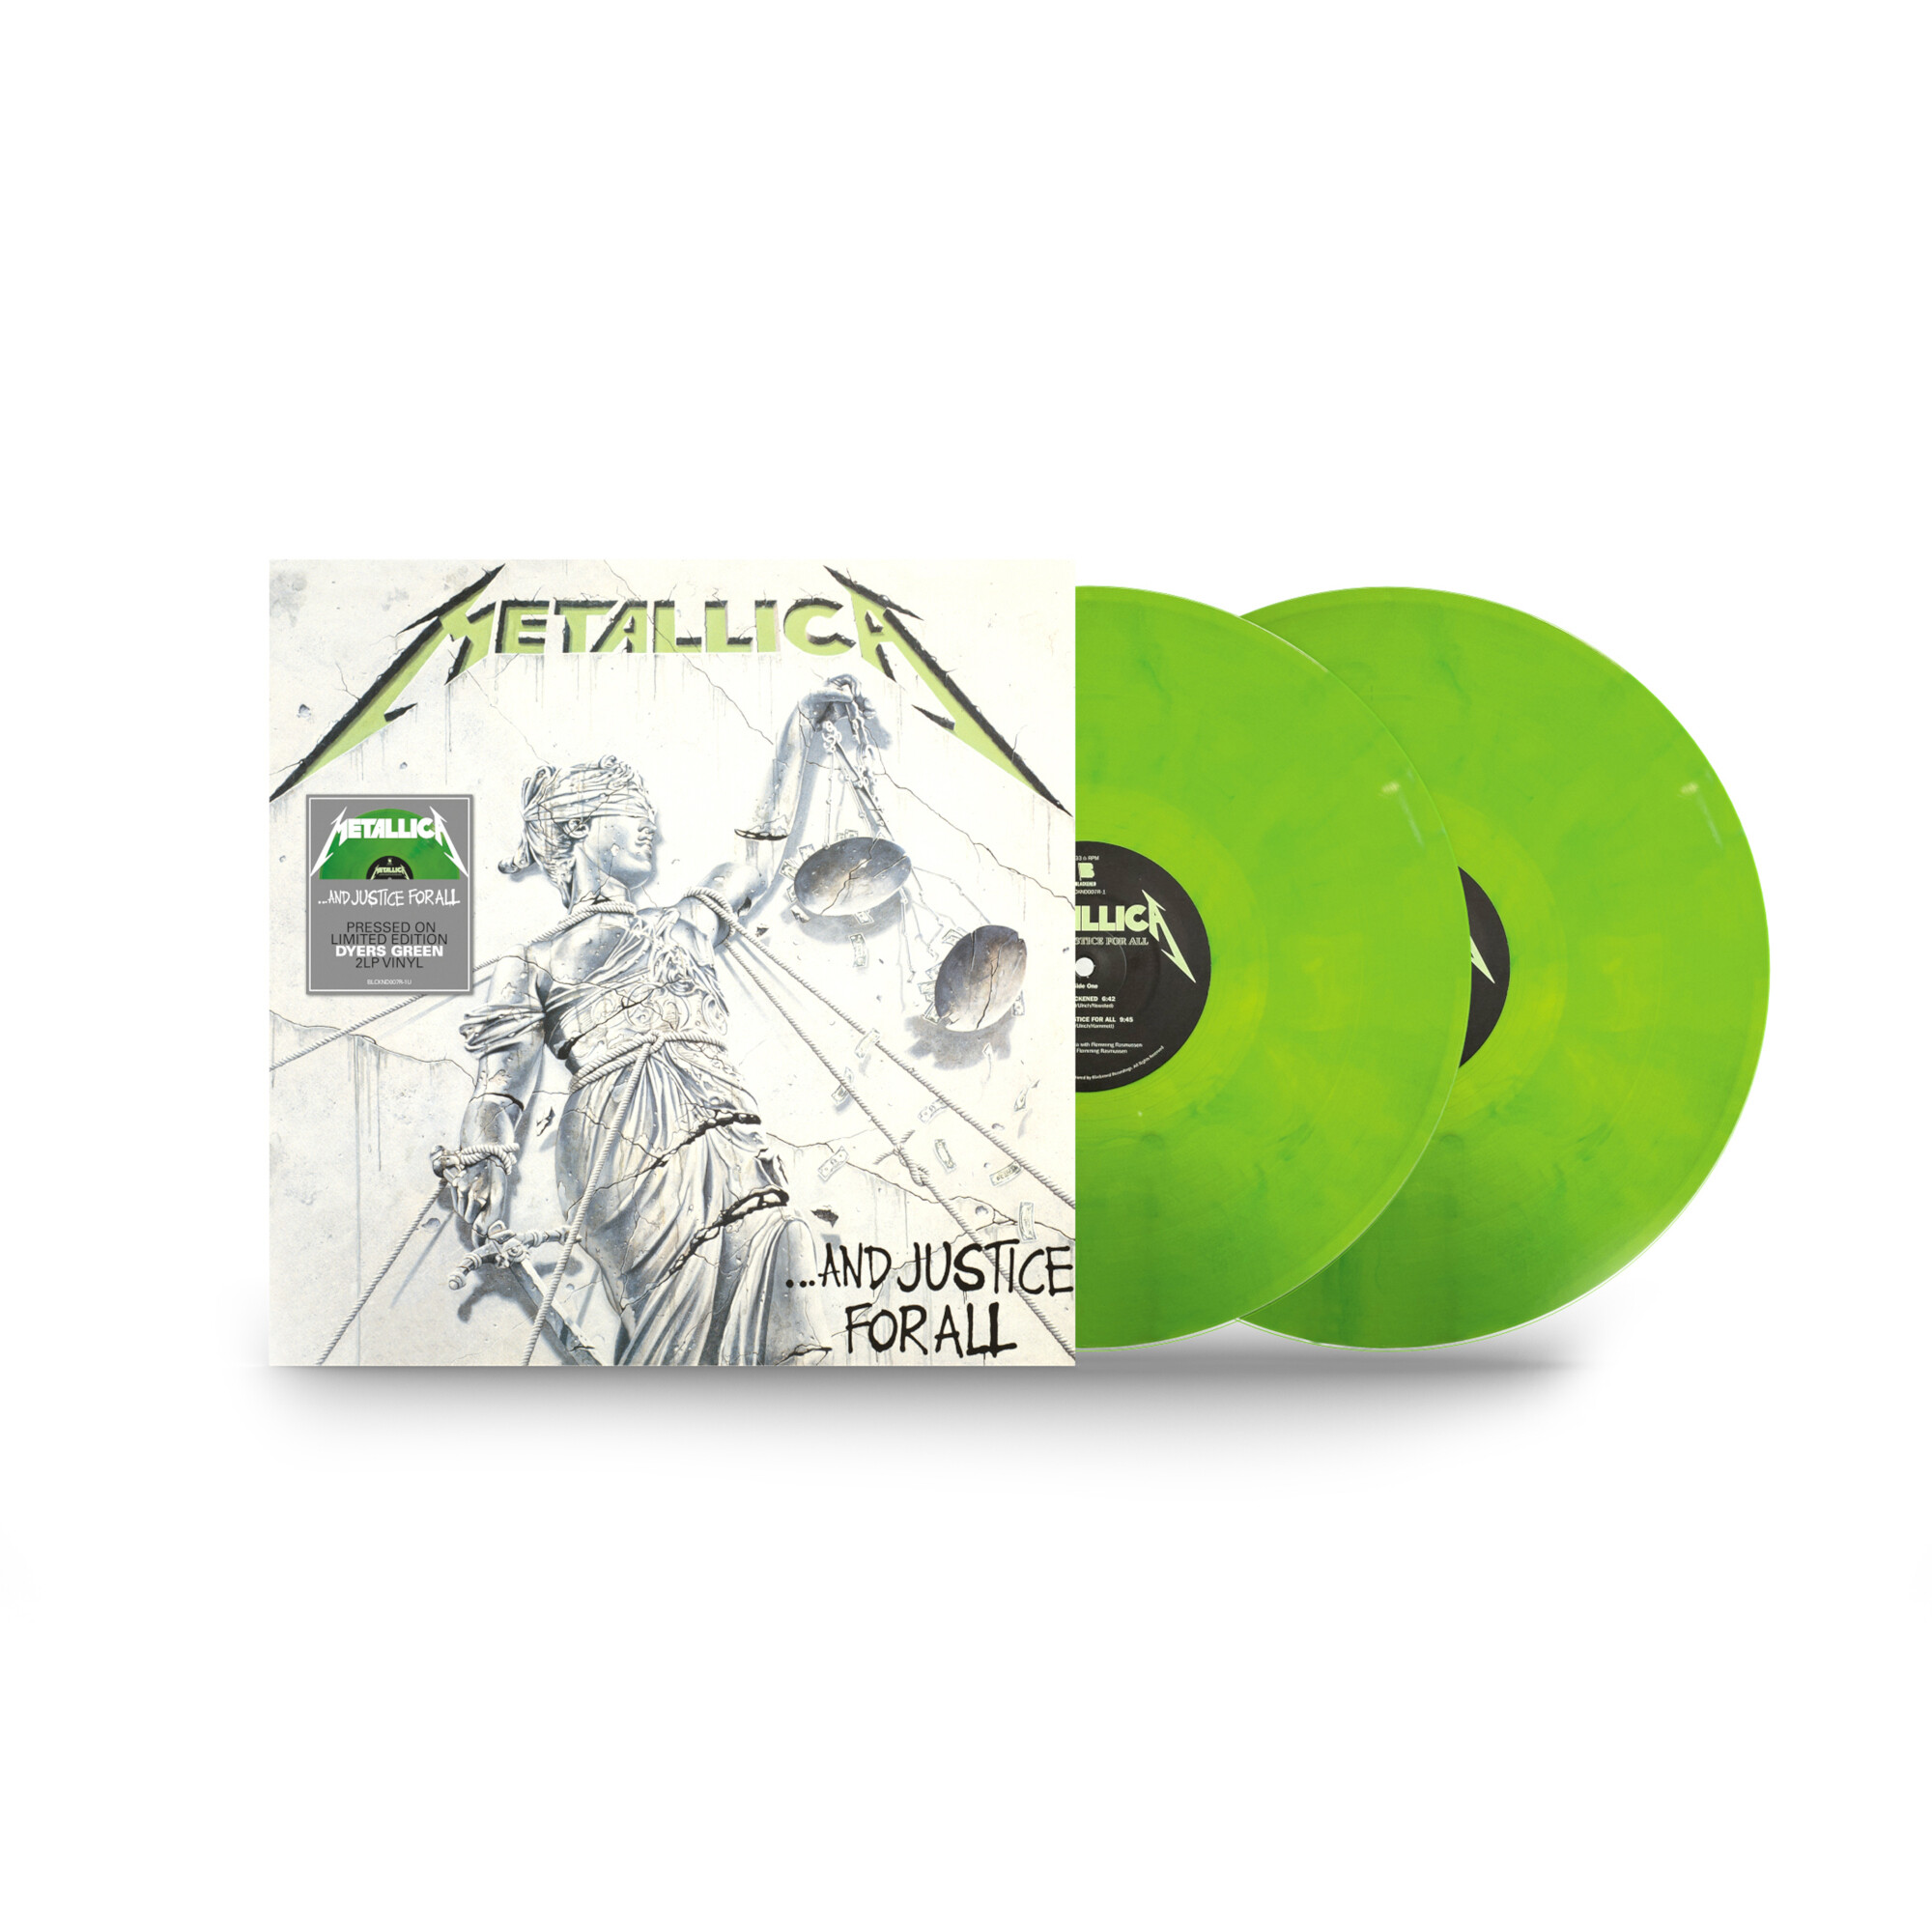 Metallica - Die ersten 5 Alben